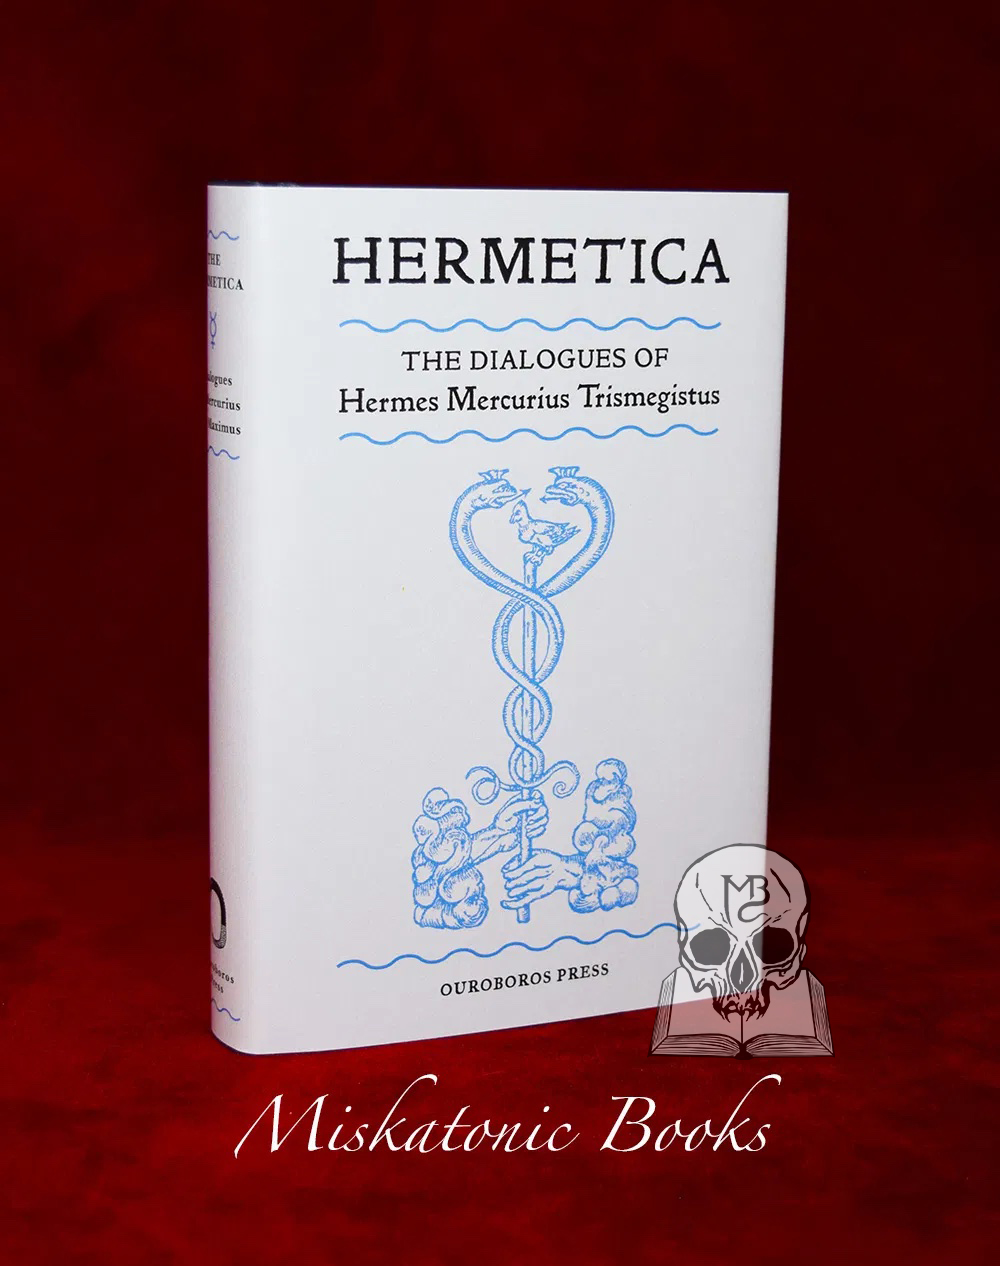 HERMETICA: The Dialogues of Hermes Mercurius Trimegistus - Limited Edition Hardcover